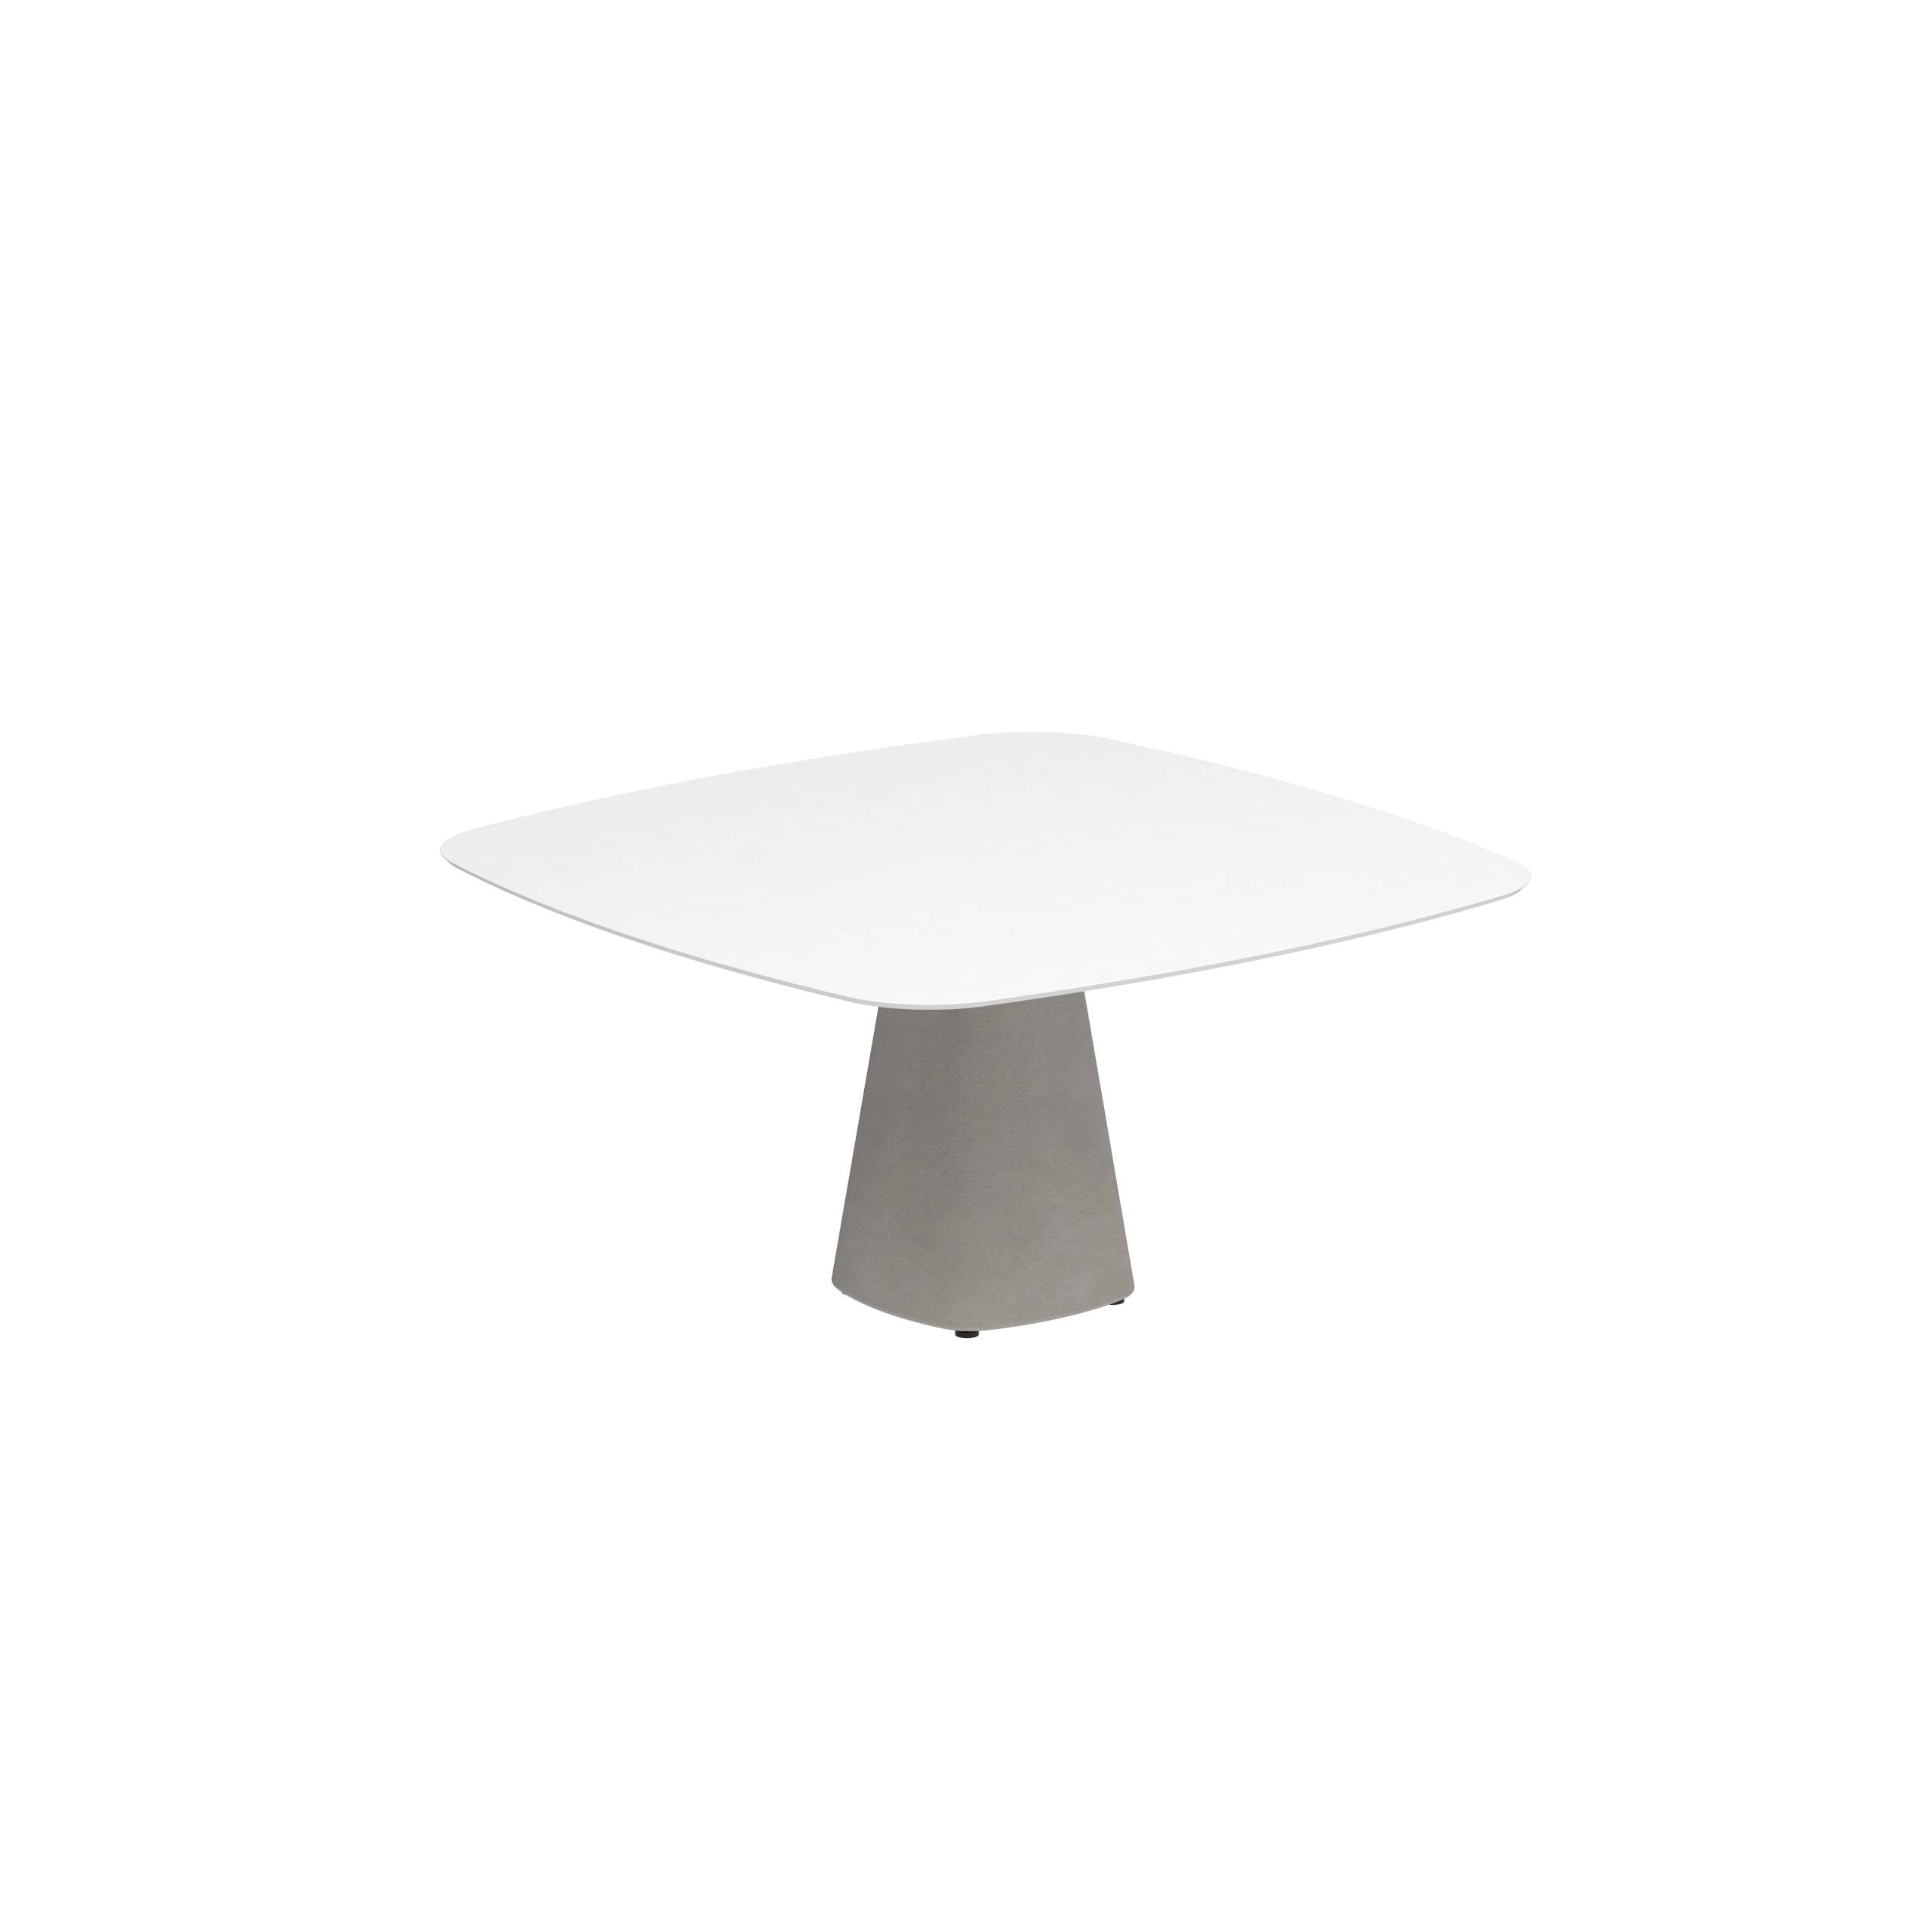 Conix Table 150x150 Cm Legs Concrete Cement Grey - Table Top Ceramic White